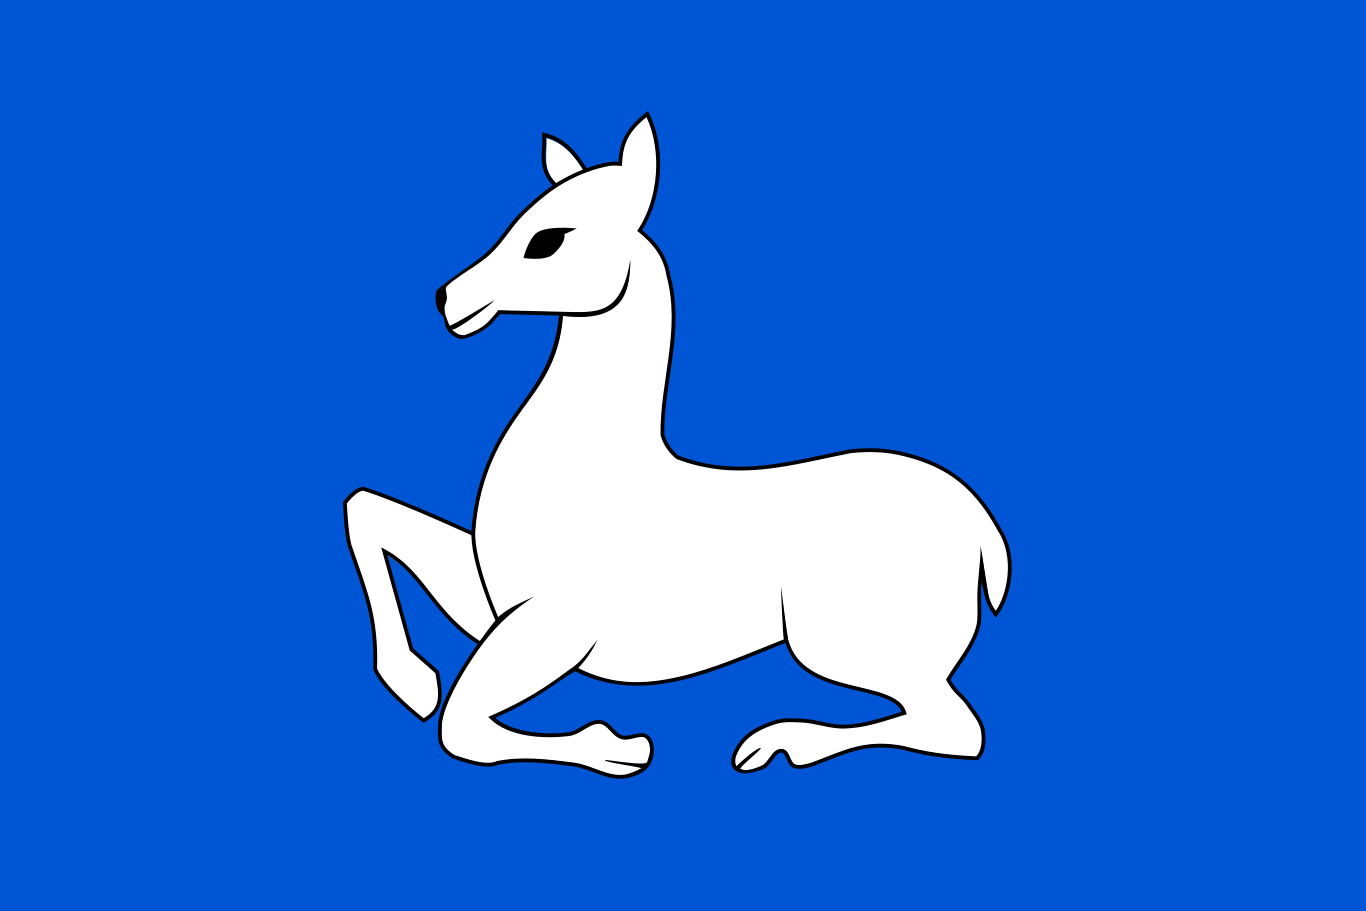 Obrázek vlajky města Rovensko Pod Troskami v rozlišení 1366x911 Liberecký kraj Rovenská vlajka 